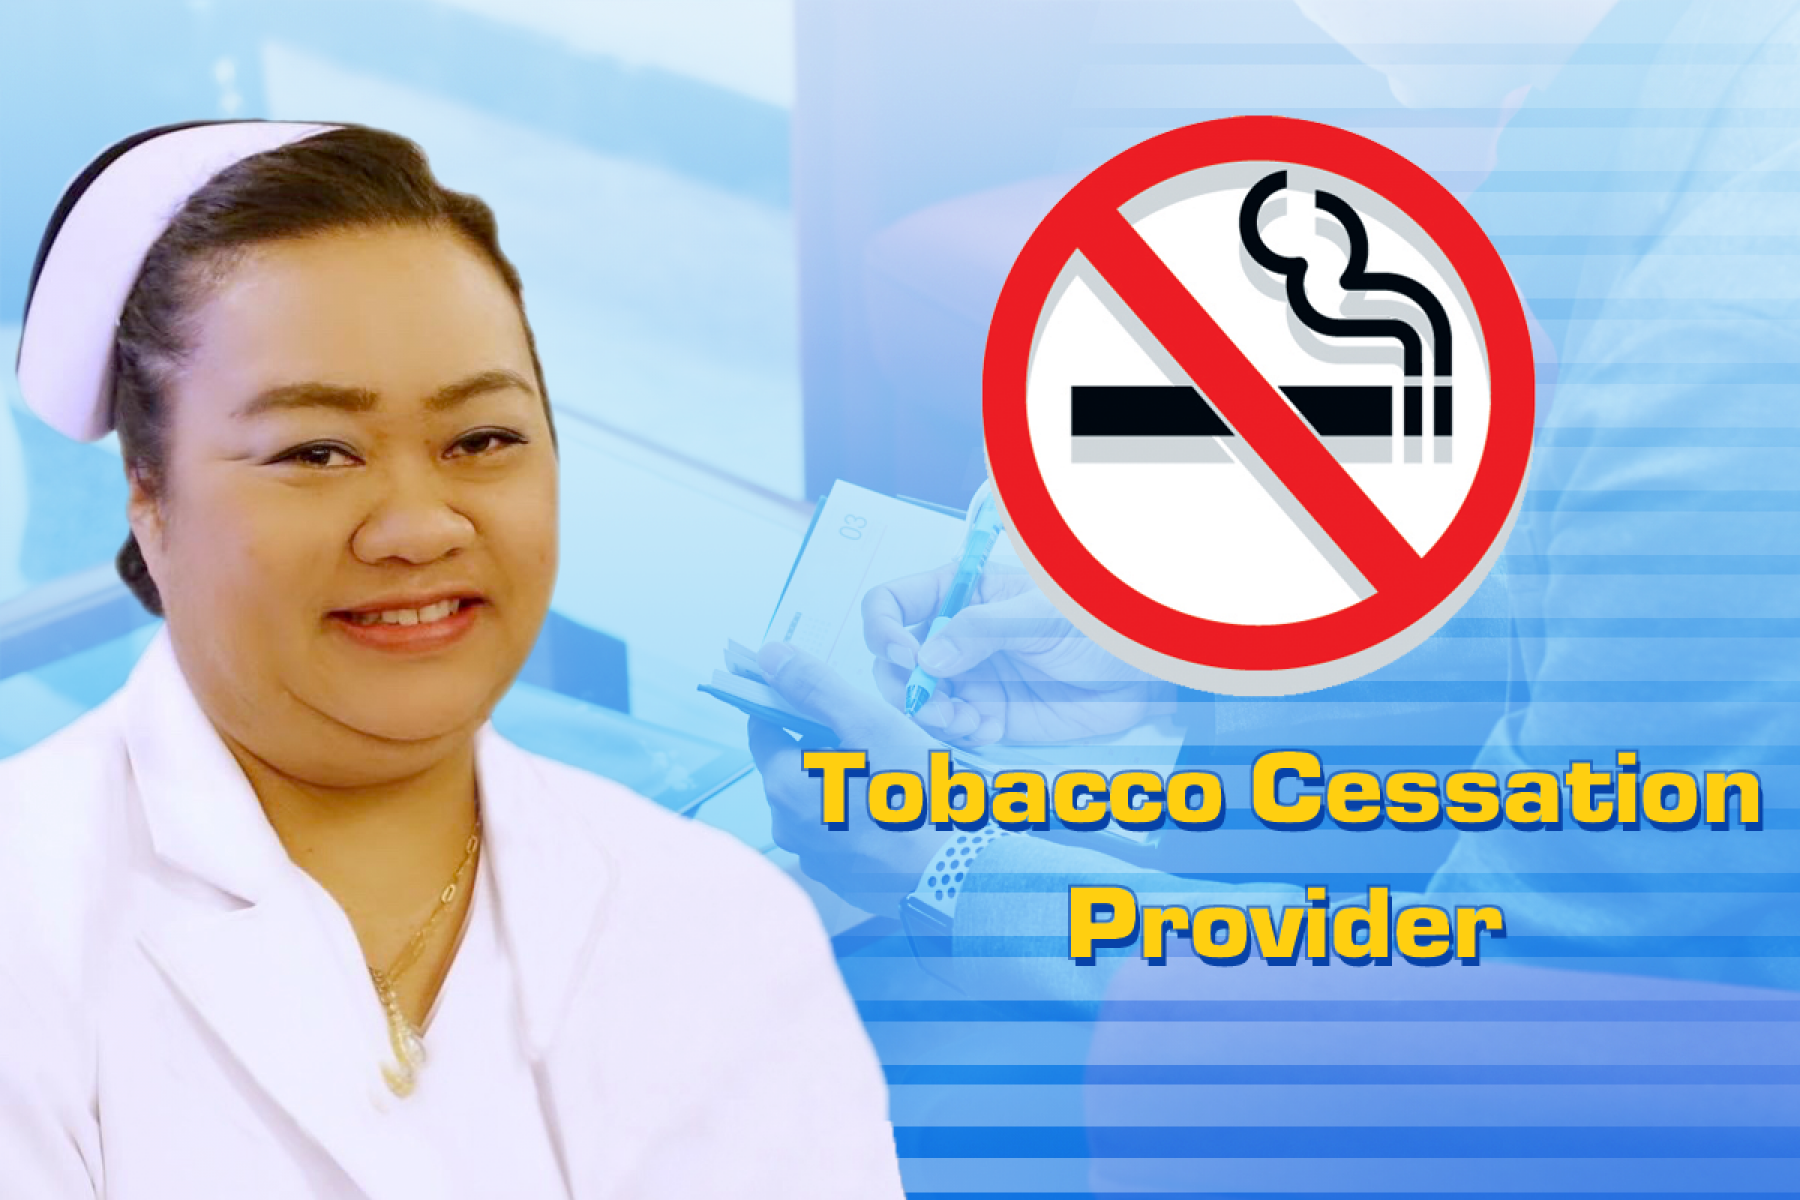 Asst. Prof. Kanyaphat Setchoduk is Qualified as a Tobacco Cessation Provider